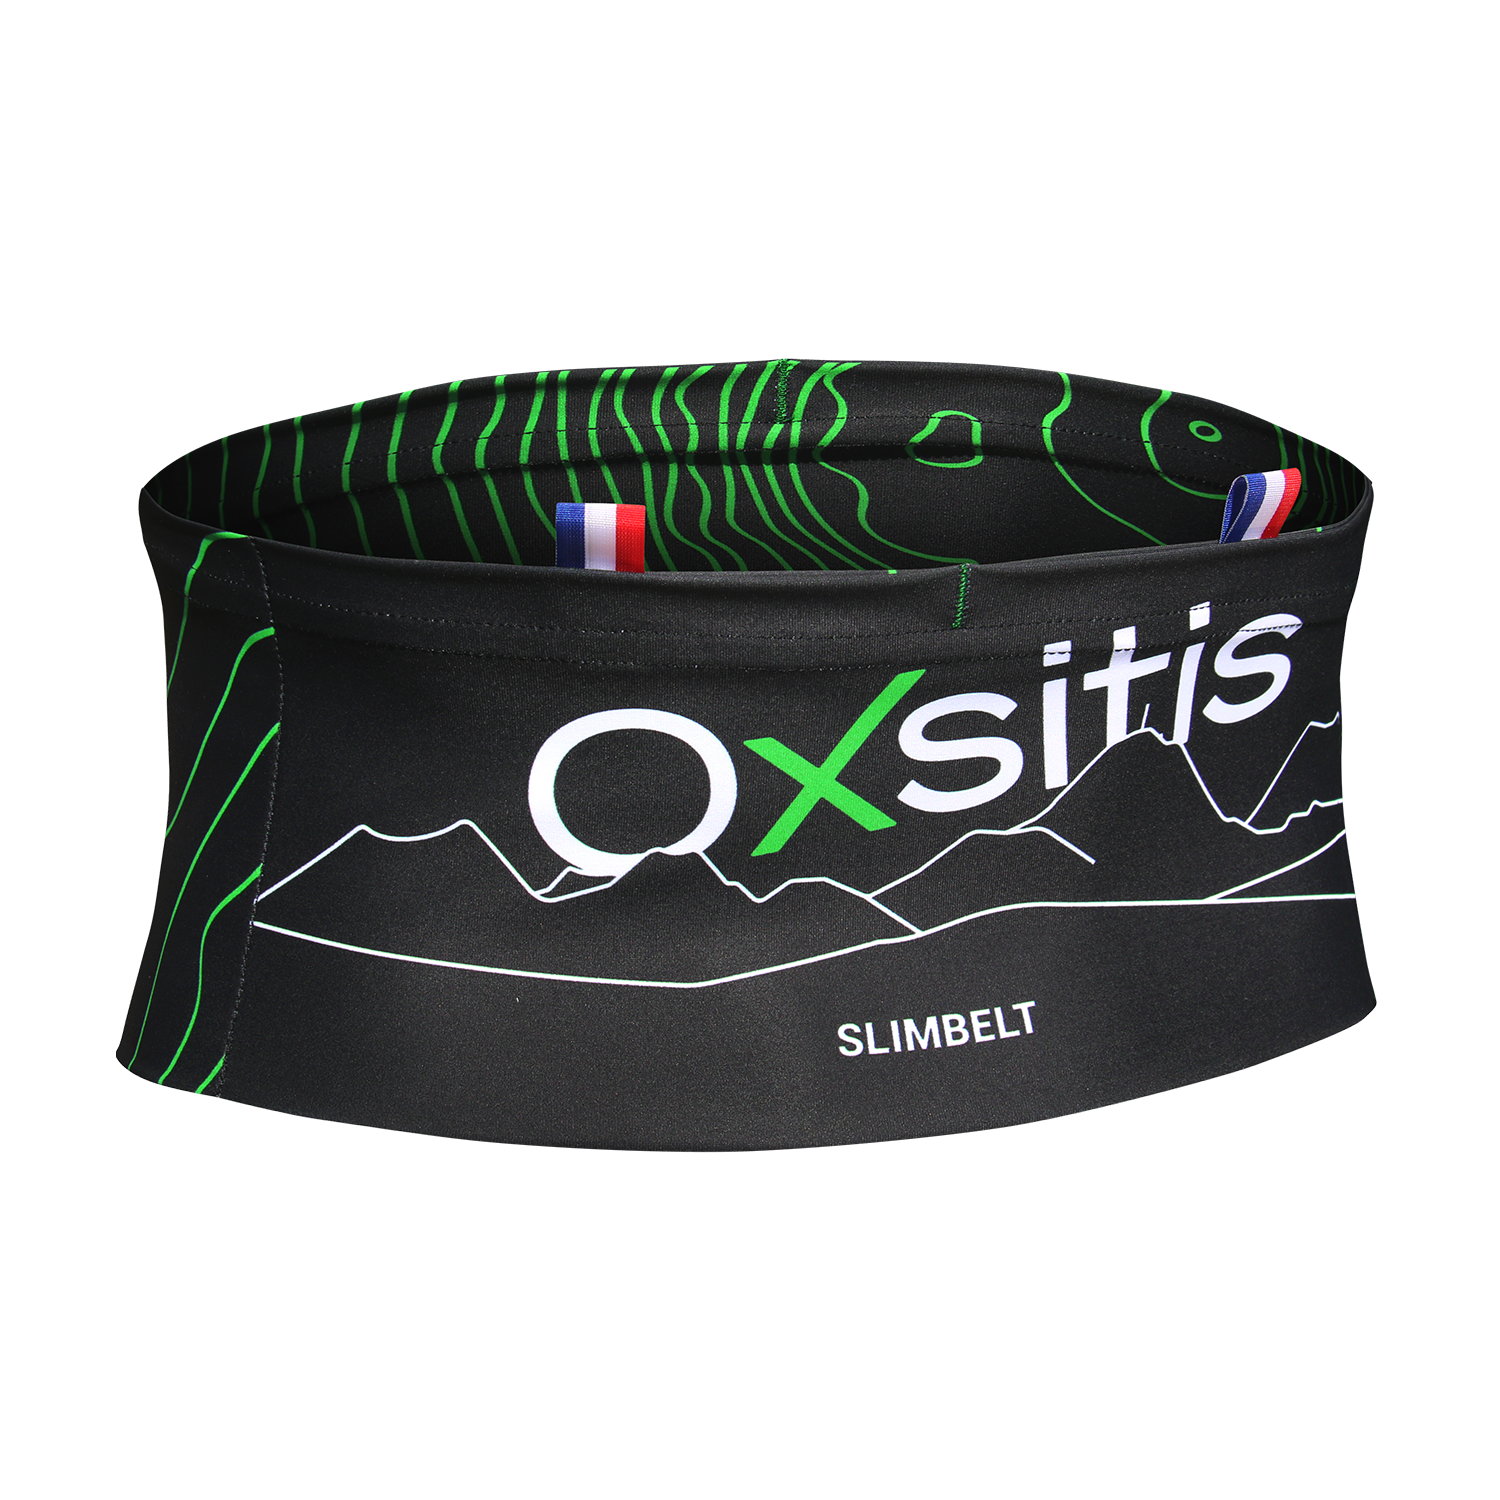 Oxsitis Slimbelt  - Hydration belt